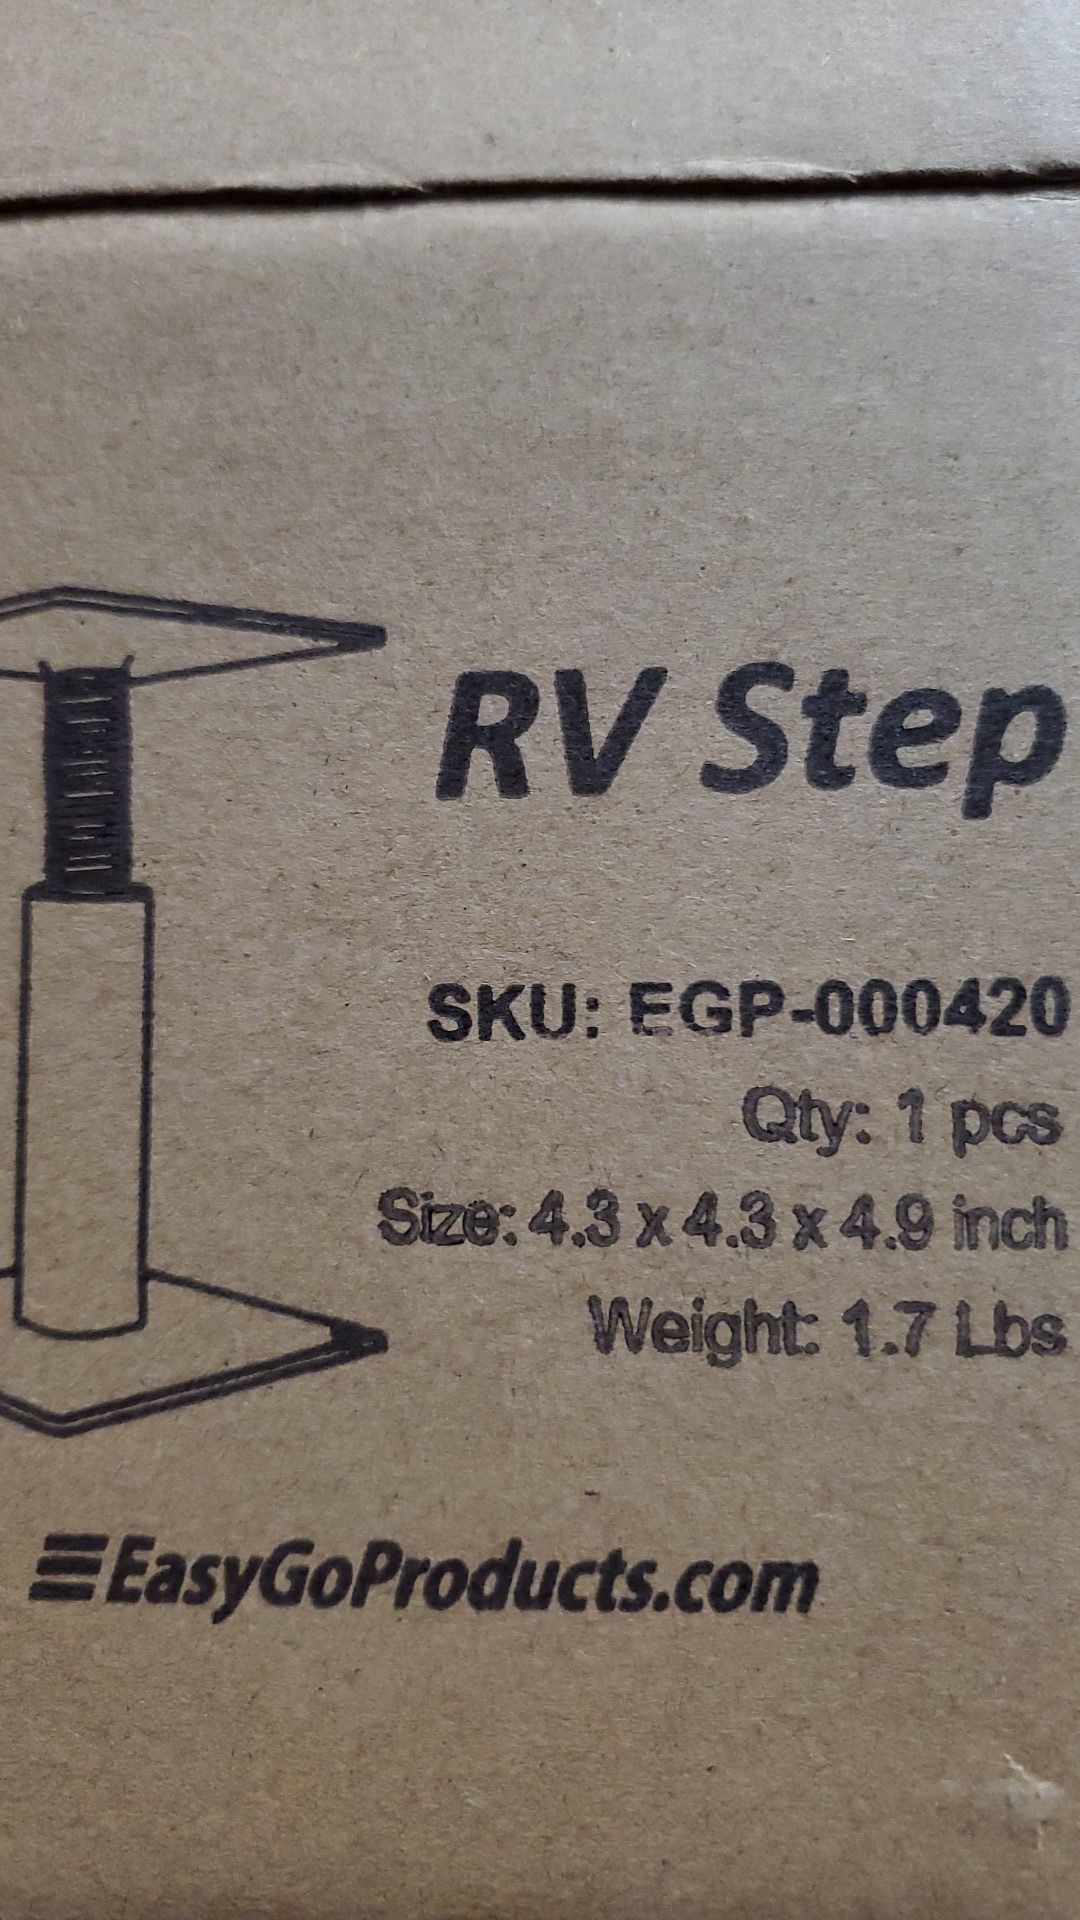 RV step